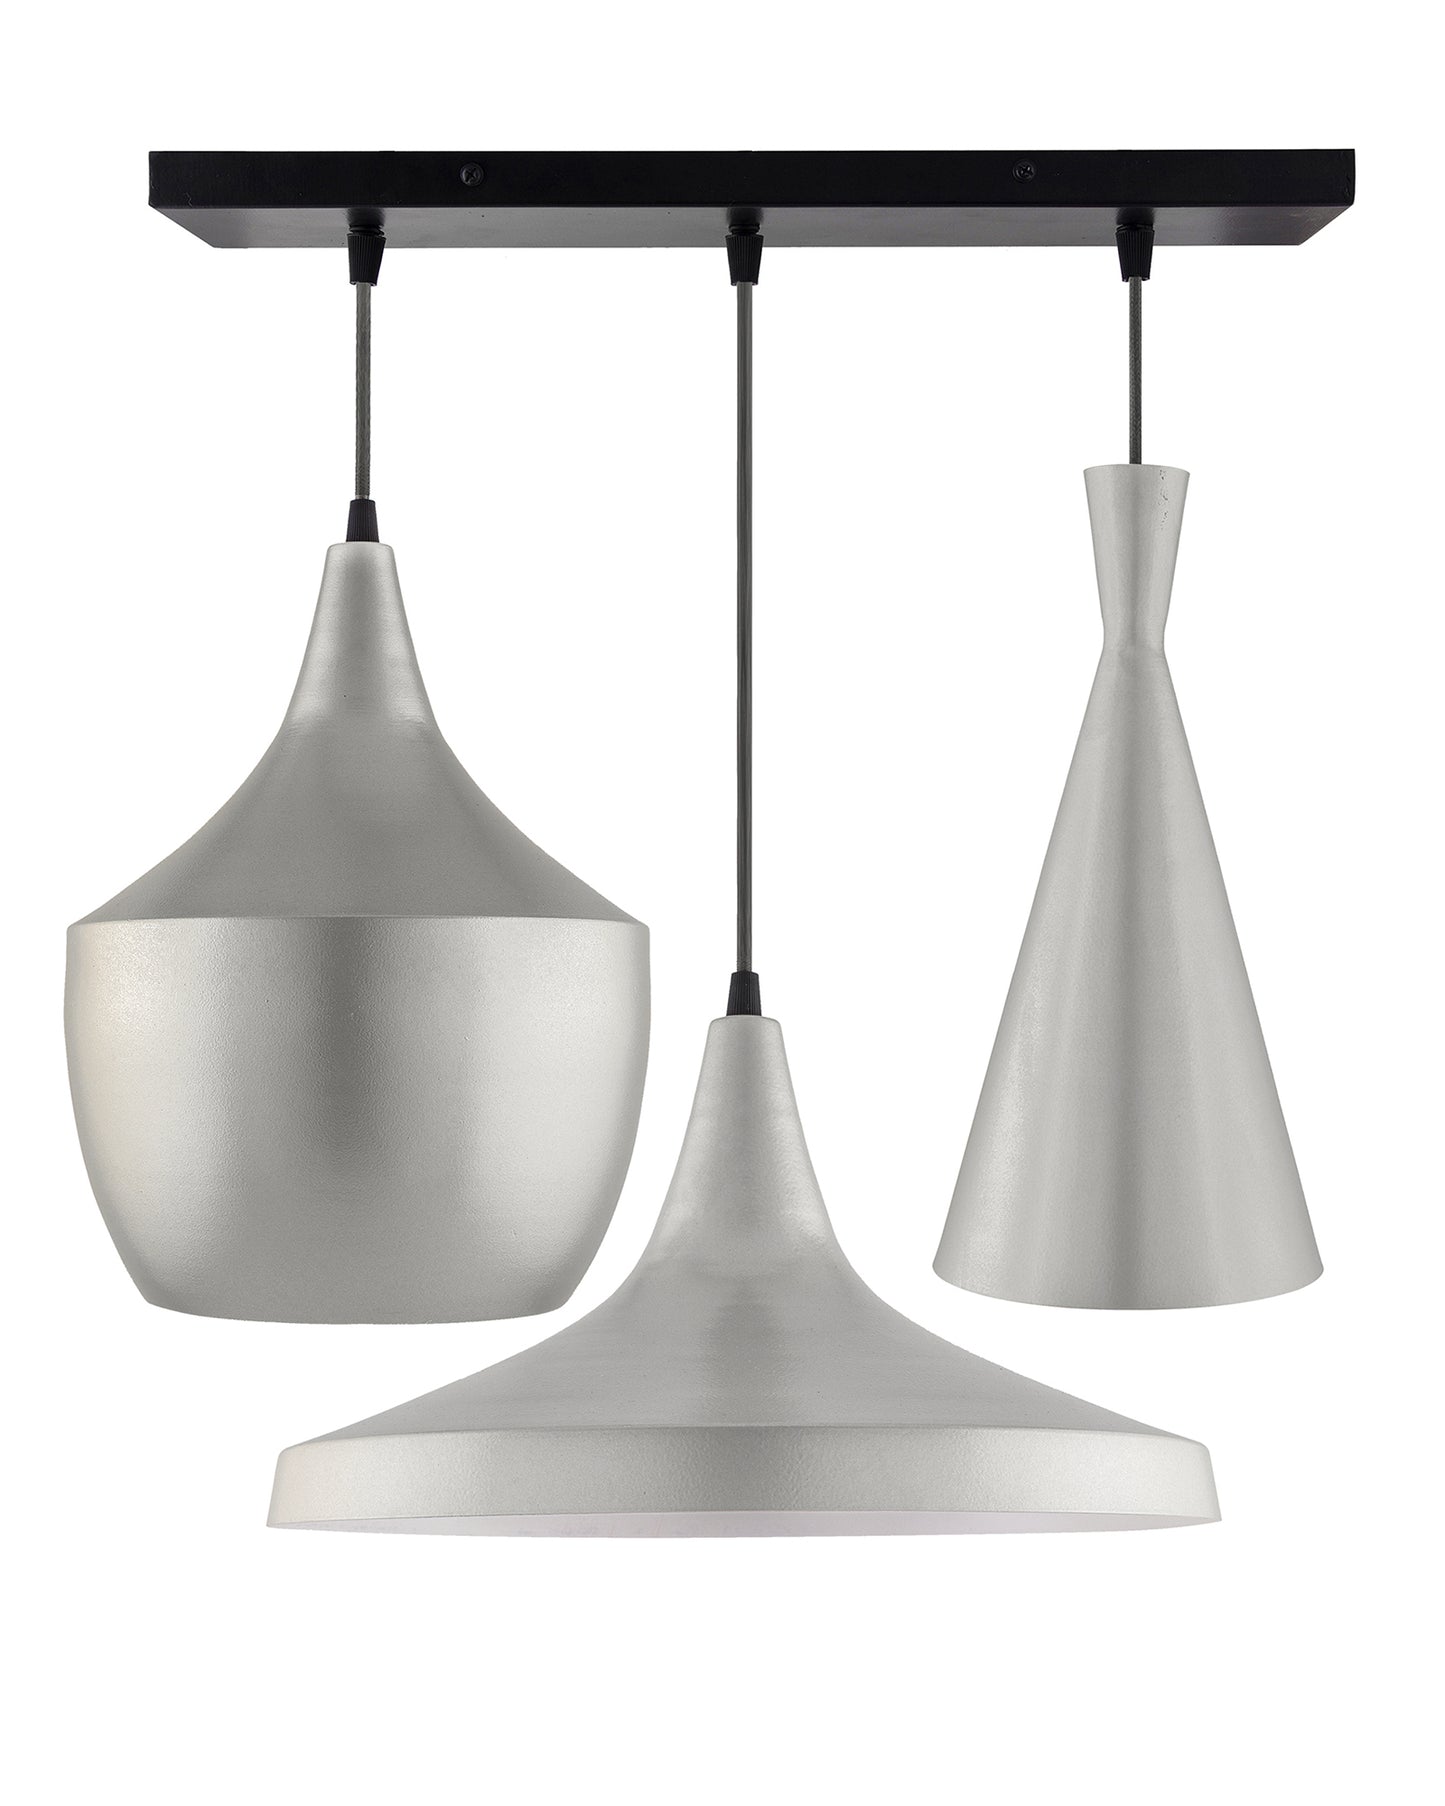 3-Lights Linear Cluster Chandelier Modern Tri-Nordic hanging Light, E27 Holder, Decorative,URBAN Retro, Nordic Style